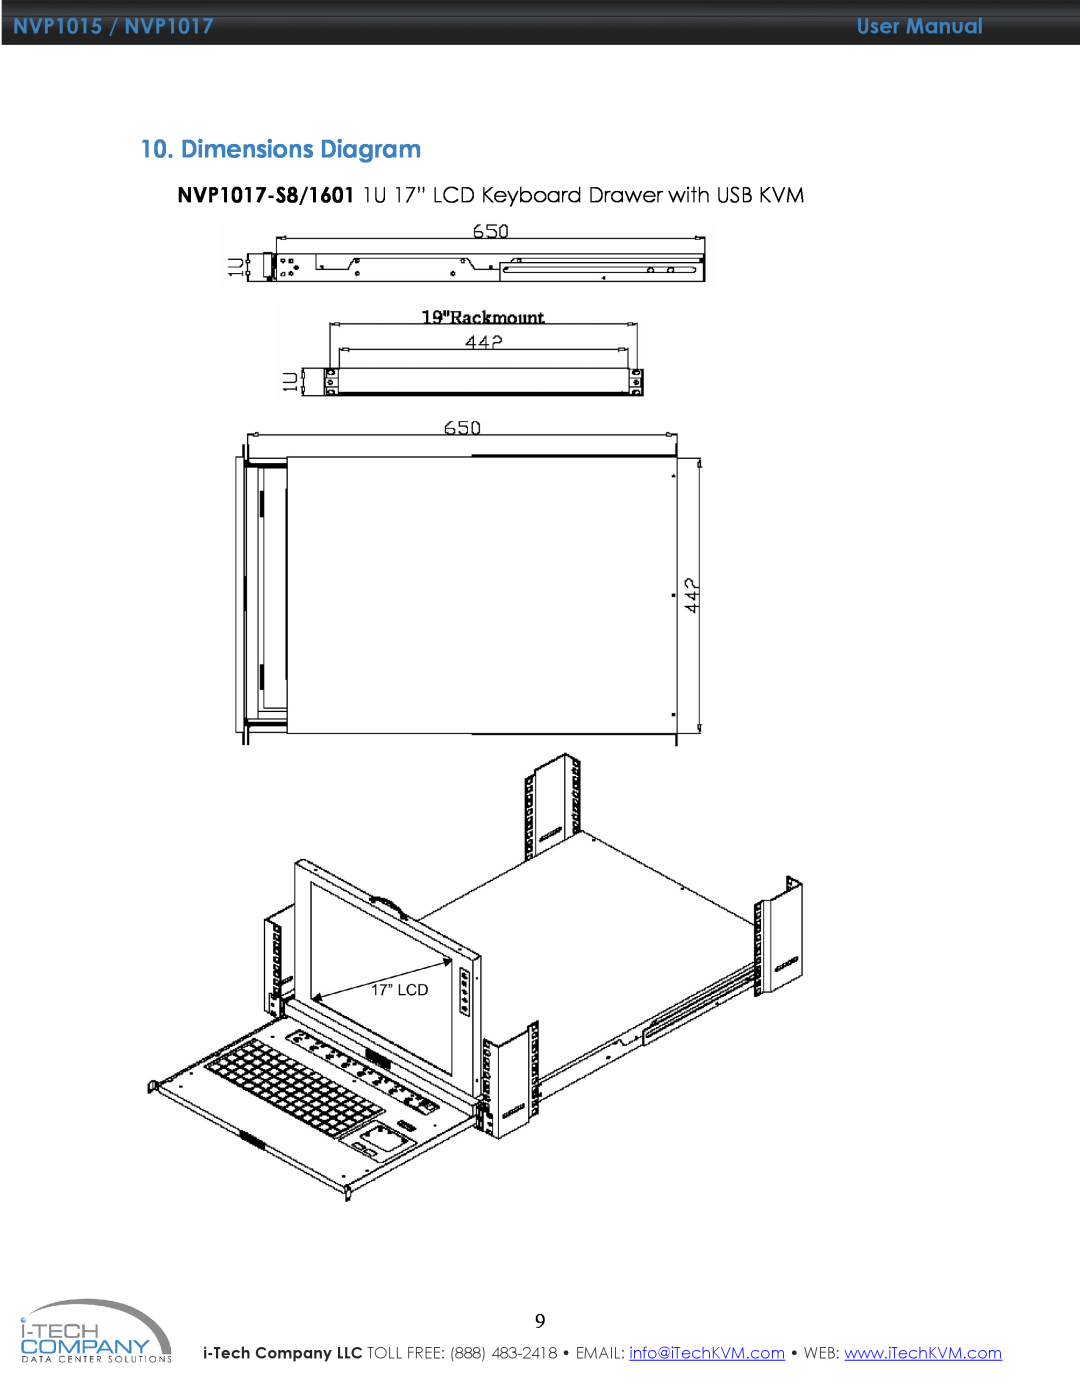 I-Tech Company manual NVP1017-S8/1601 1U 17” LCD Keyboard Drawer with USB KVM, Dimensions Diagram, NVP1015 / NVP1017 